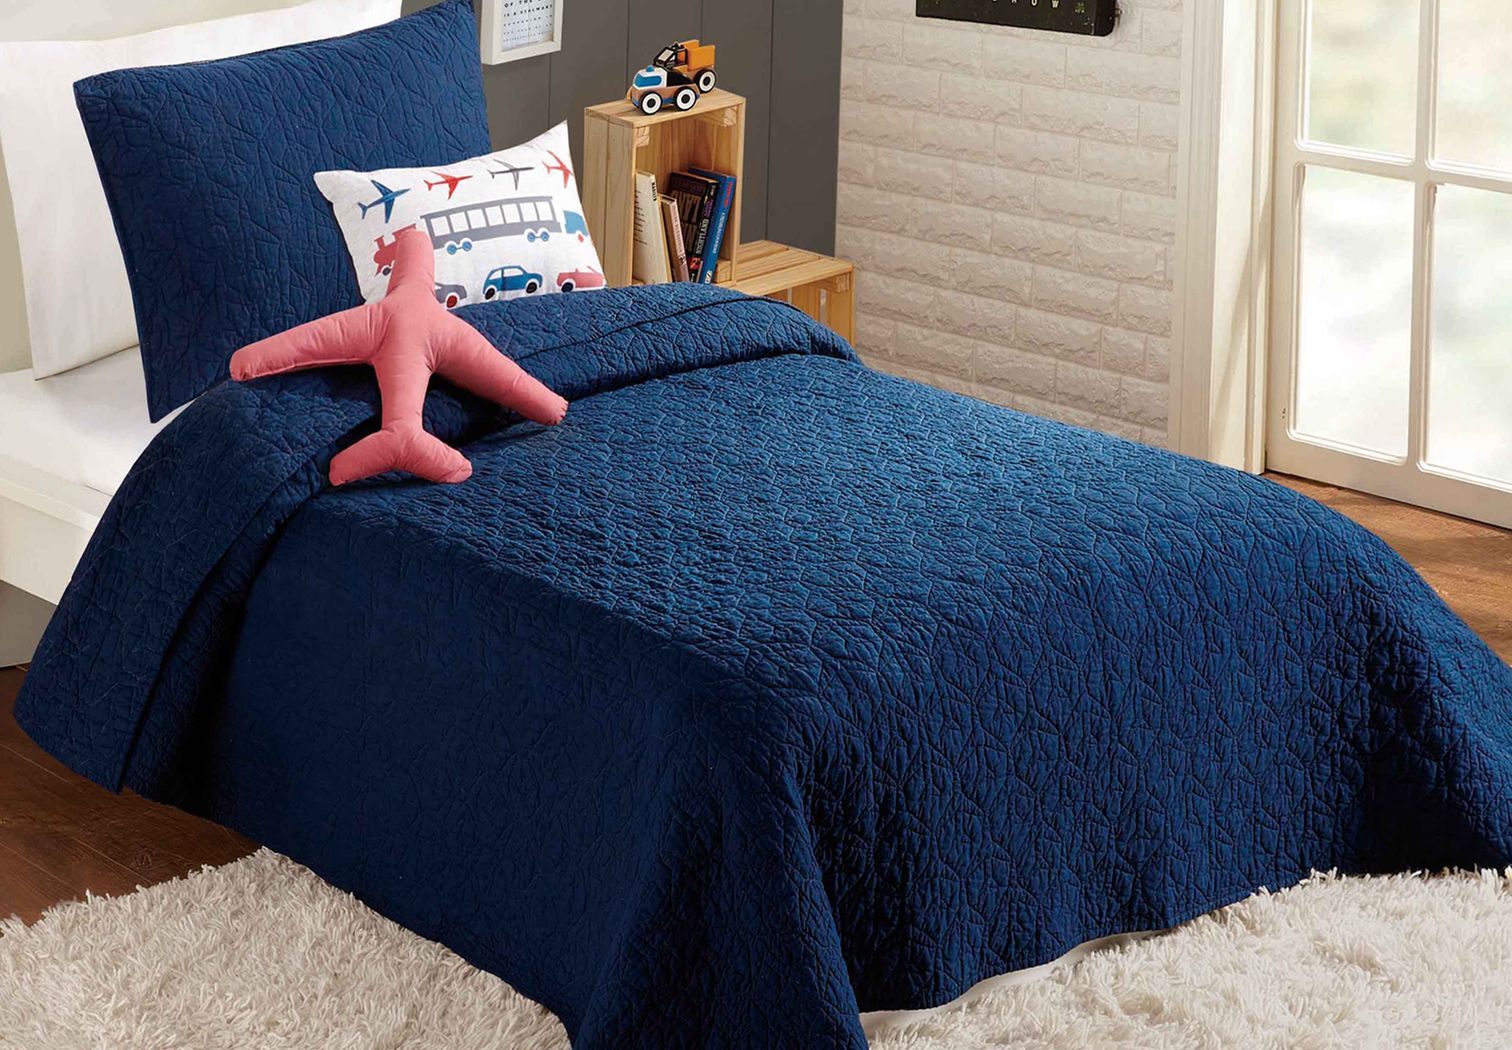 Airplane Bedding Blankets Crib Sheets Comforters Etc